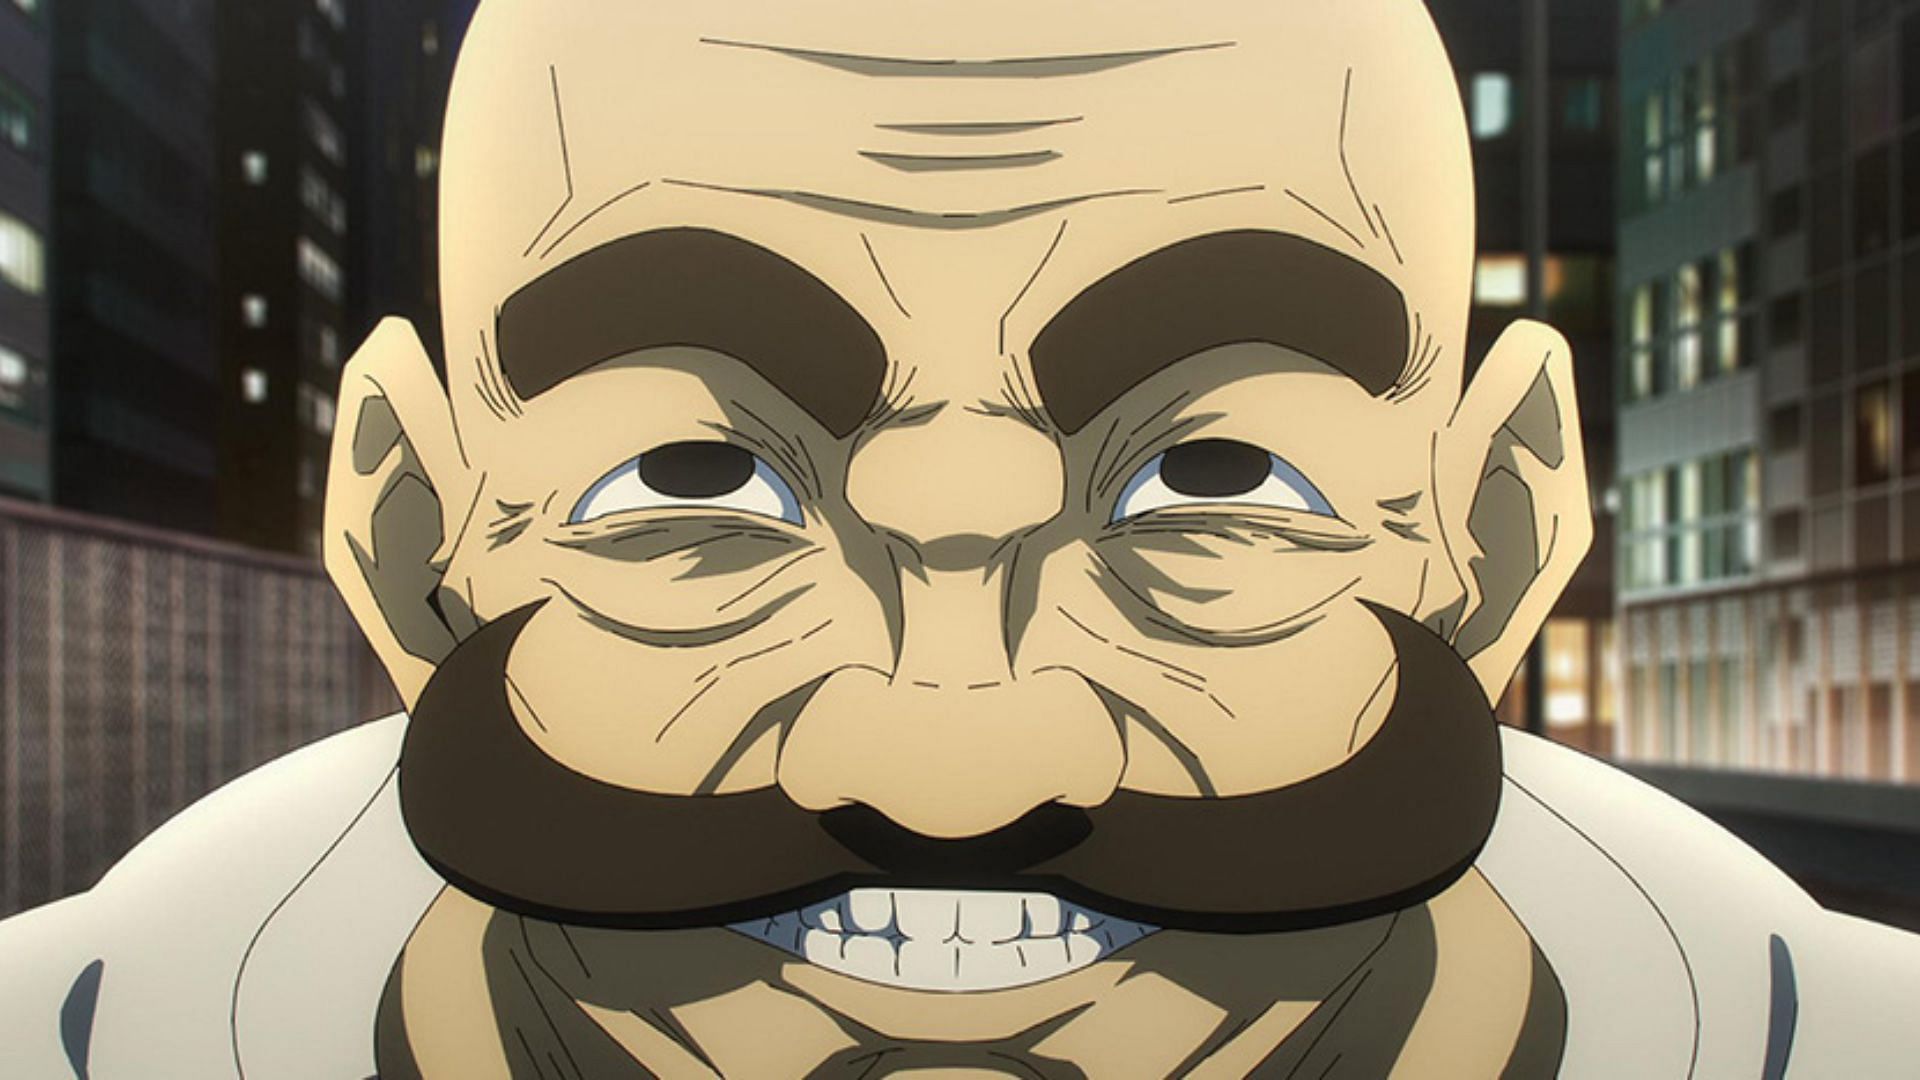 Jujutsu Kaisen Hype! Phantom Seer ending soon? - Anime After Hours Episode  11